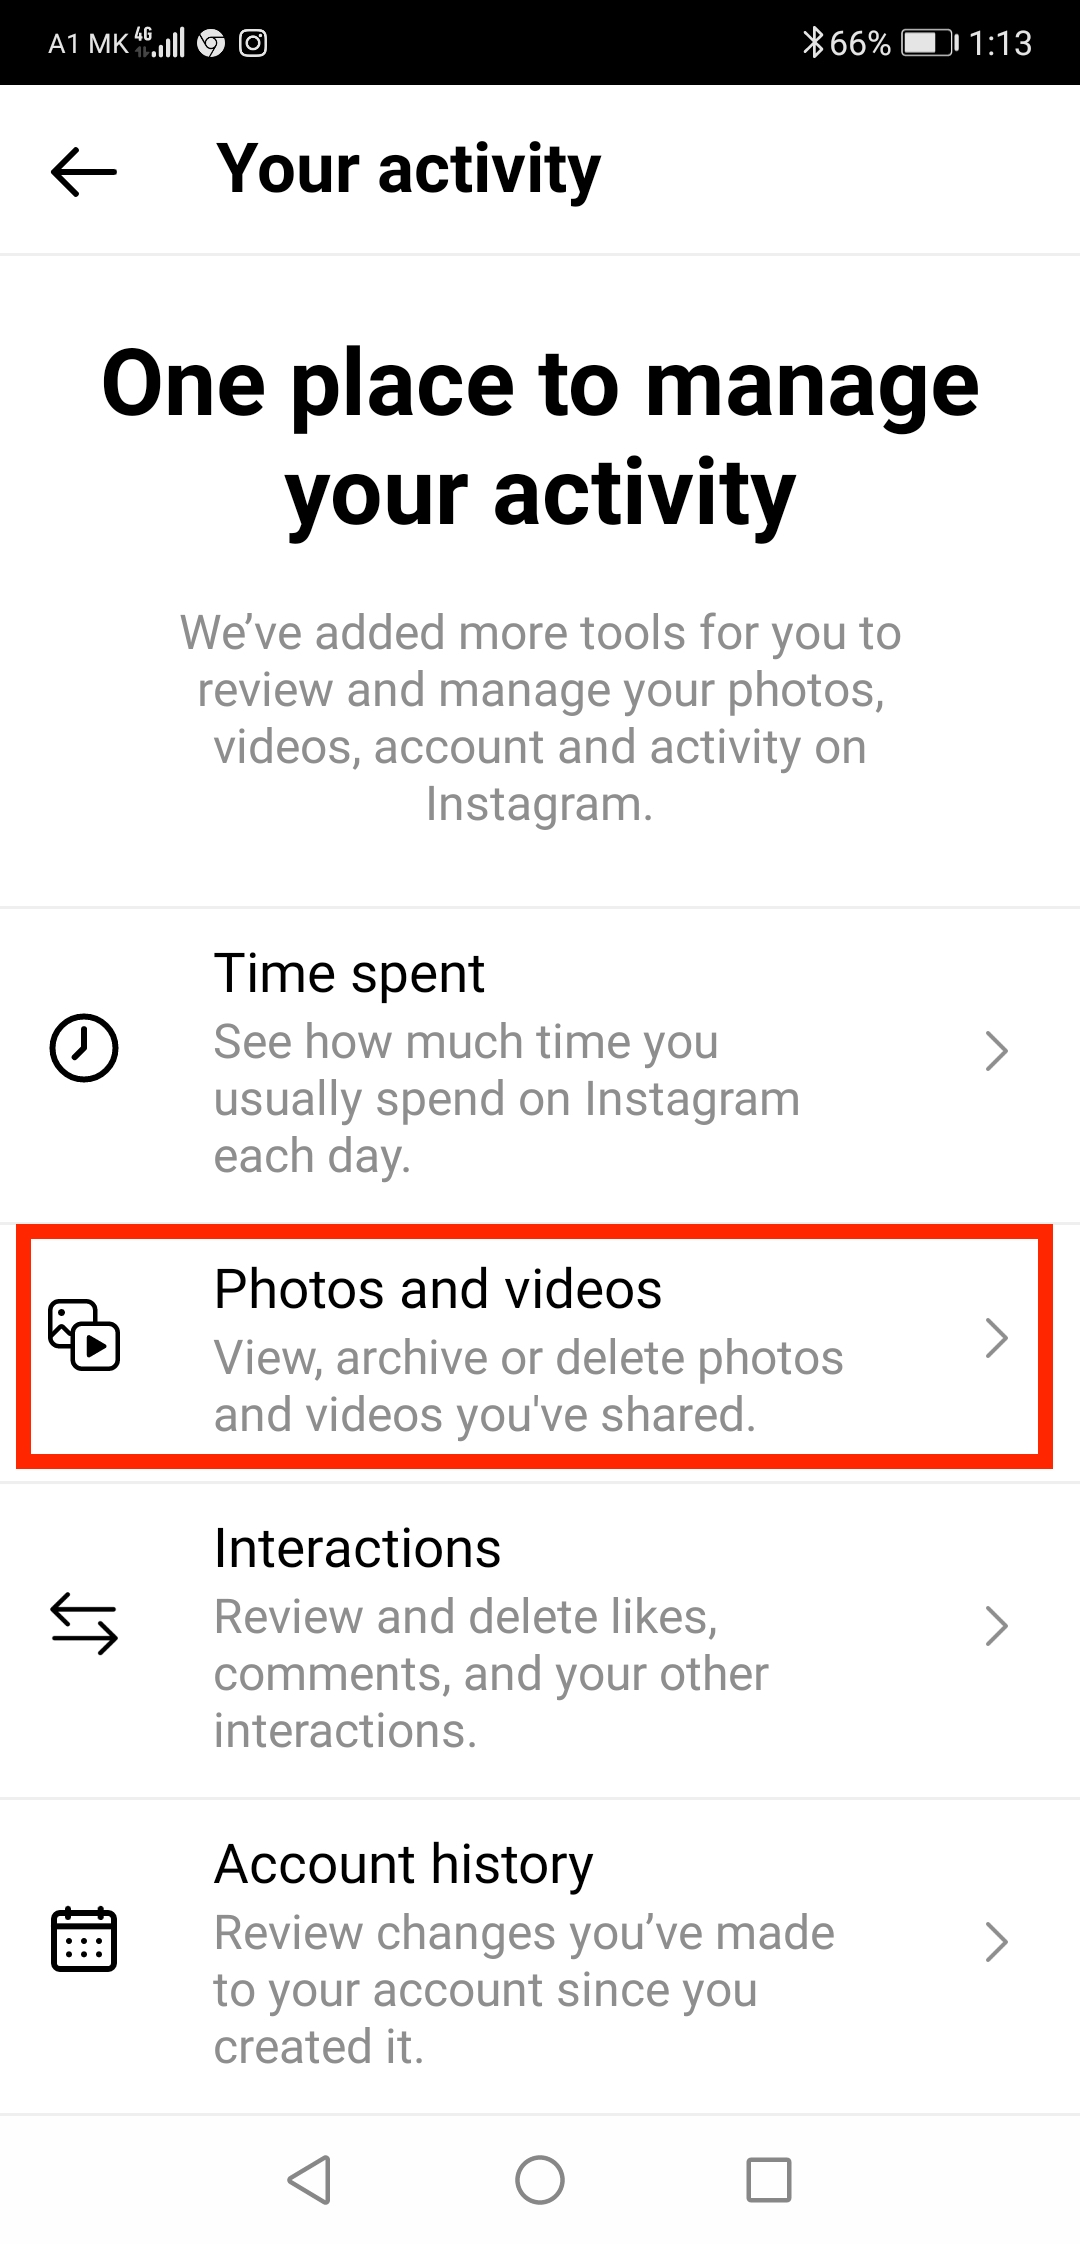 Select 'Photos and videos'